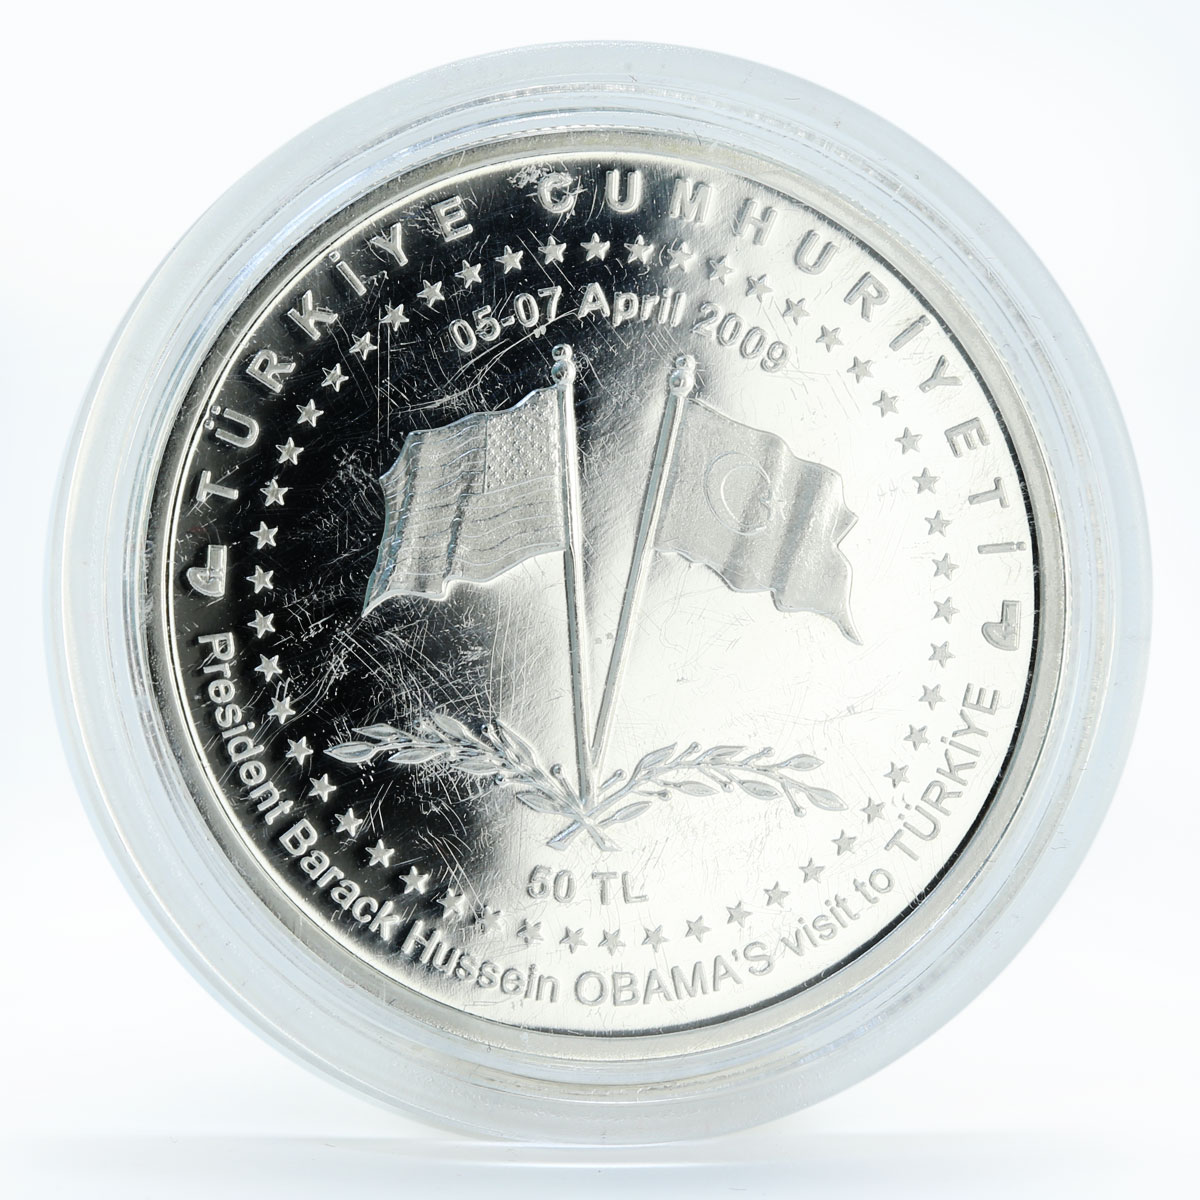 Turkey 50 lira Visit of Barack Obama silver coin 2009